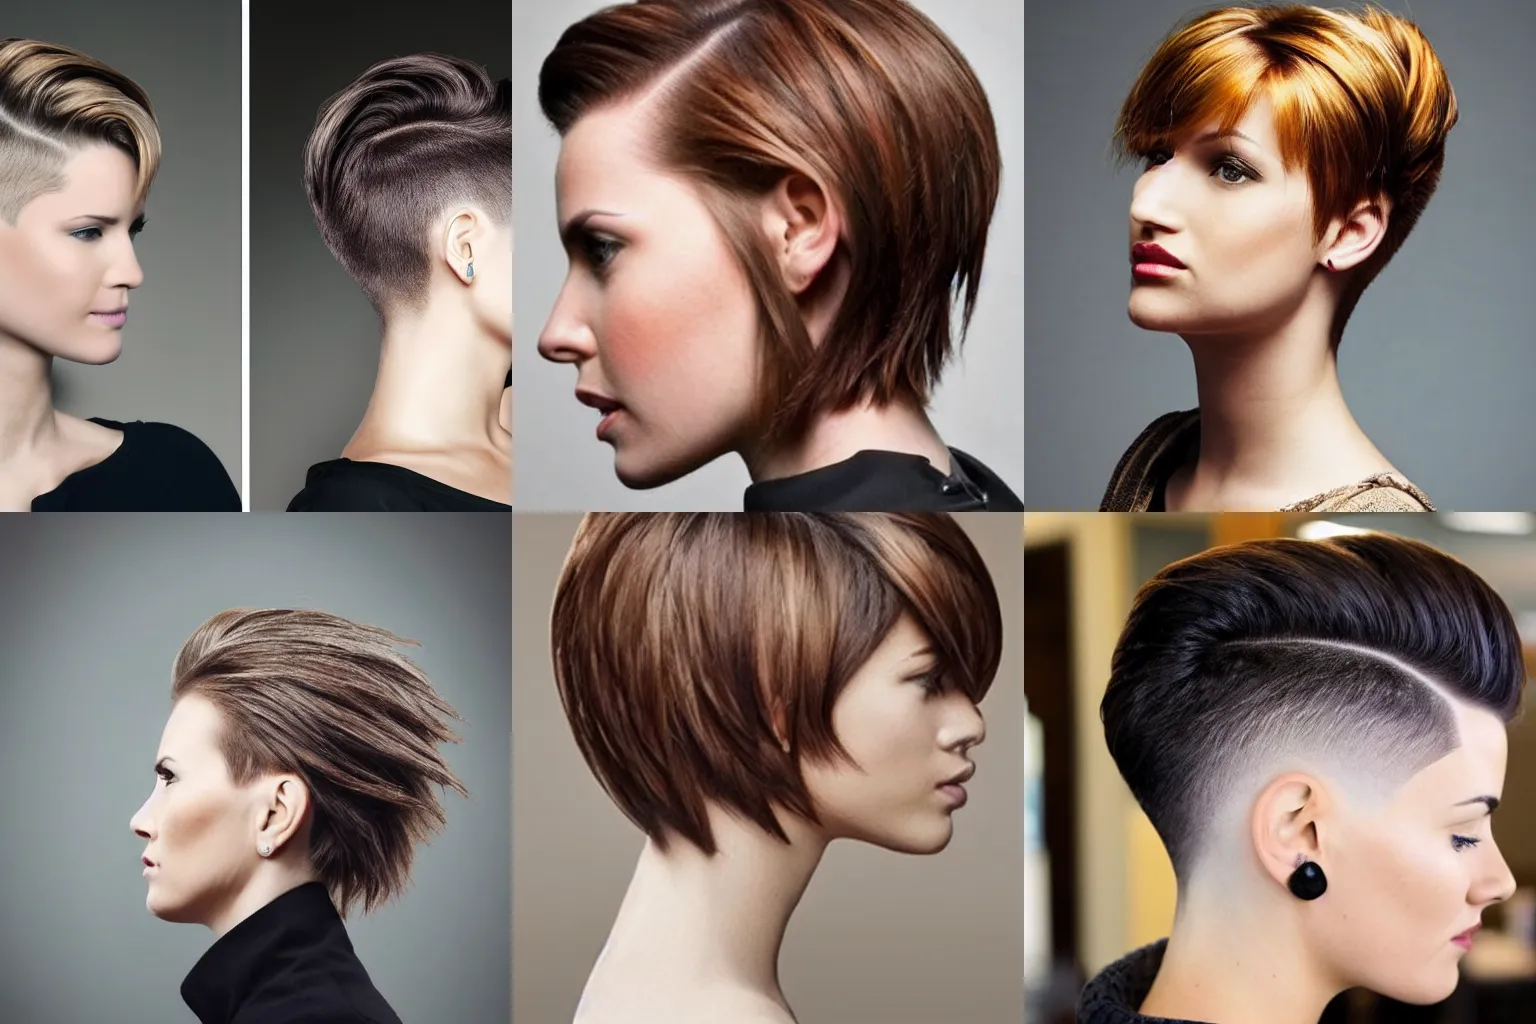 15 Best Man Bun Undercut Hairstyles - Men's Hairstyle Tips | Man bun  hairstyles, Man bun undercut, Man bun haircut